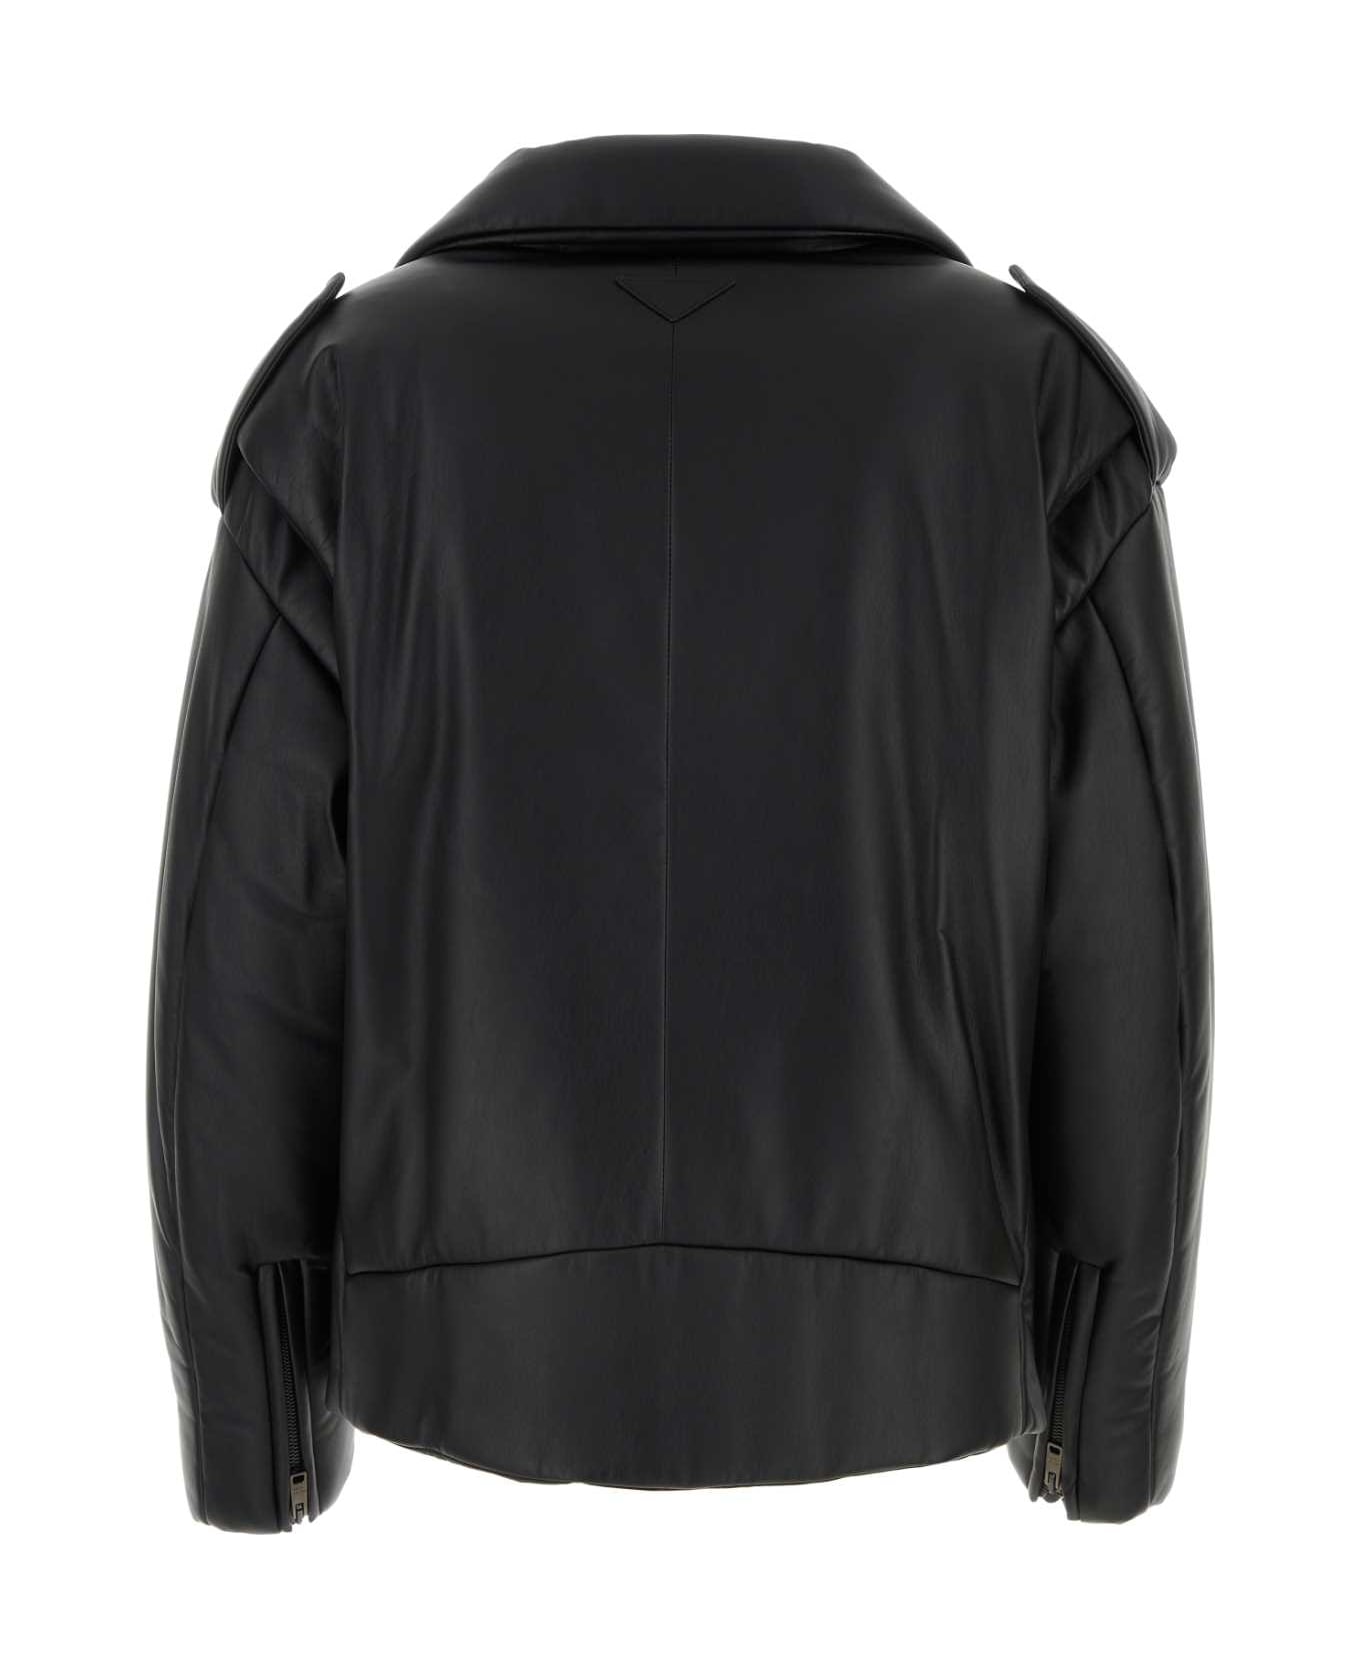 Prada Black Nappa Leather Padded Jacket - NERO